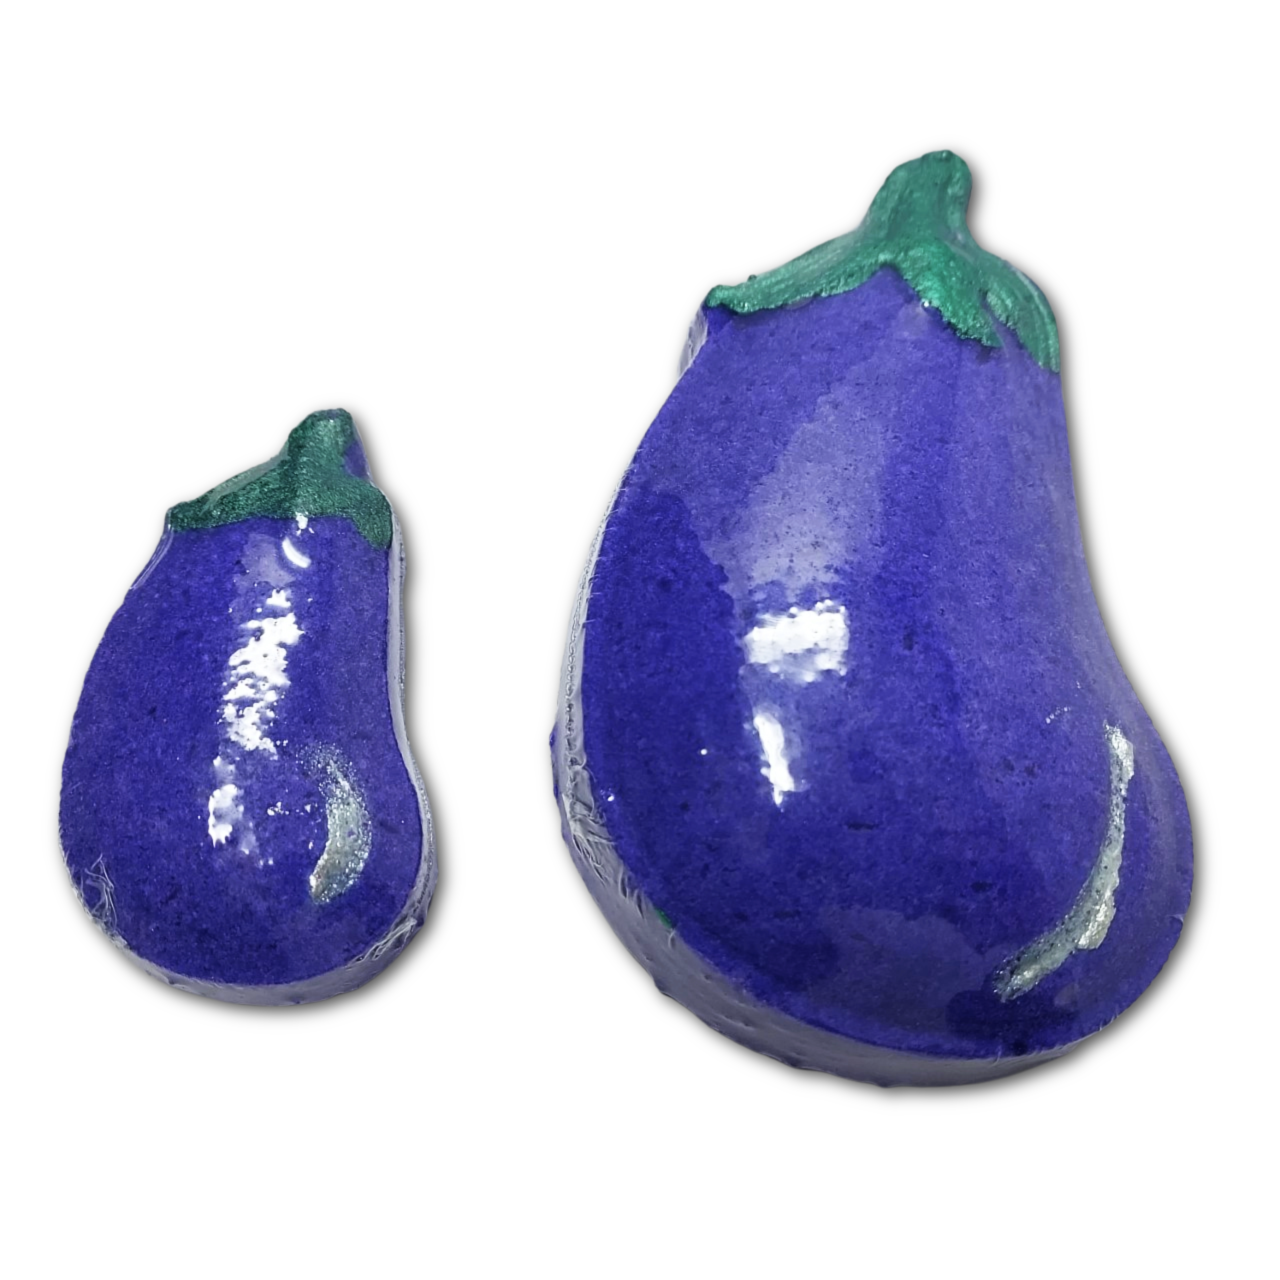 Eggplant Bath Bombs